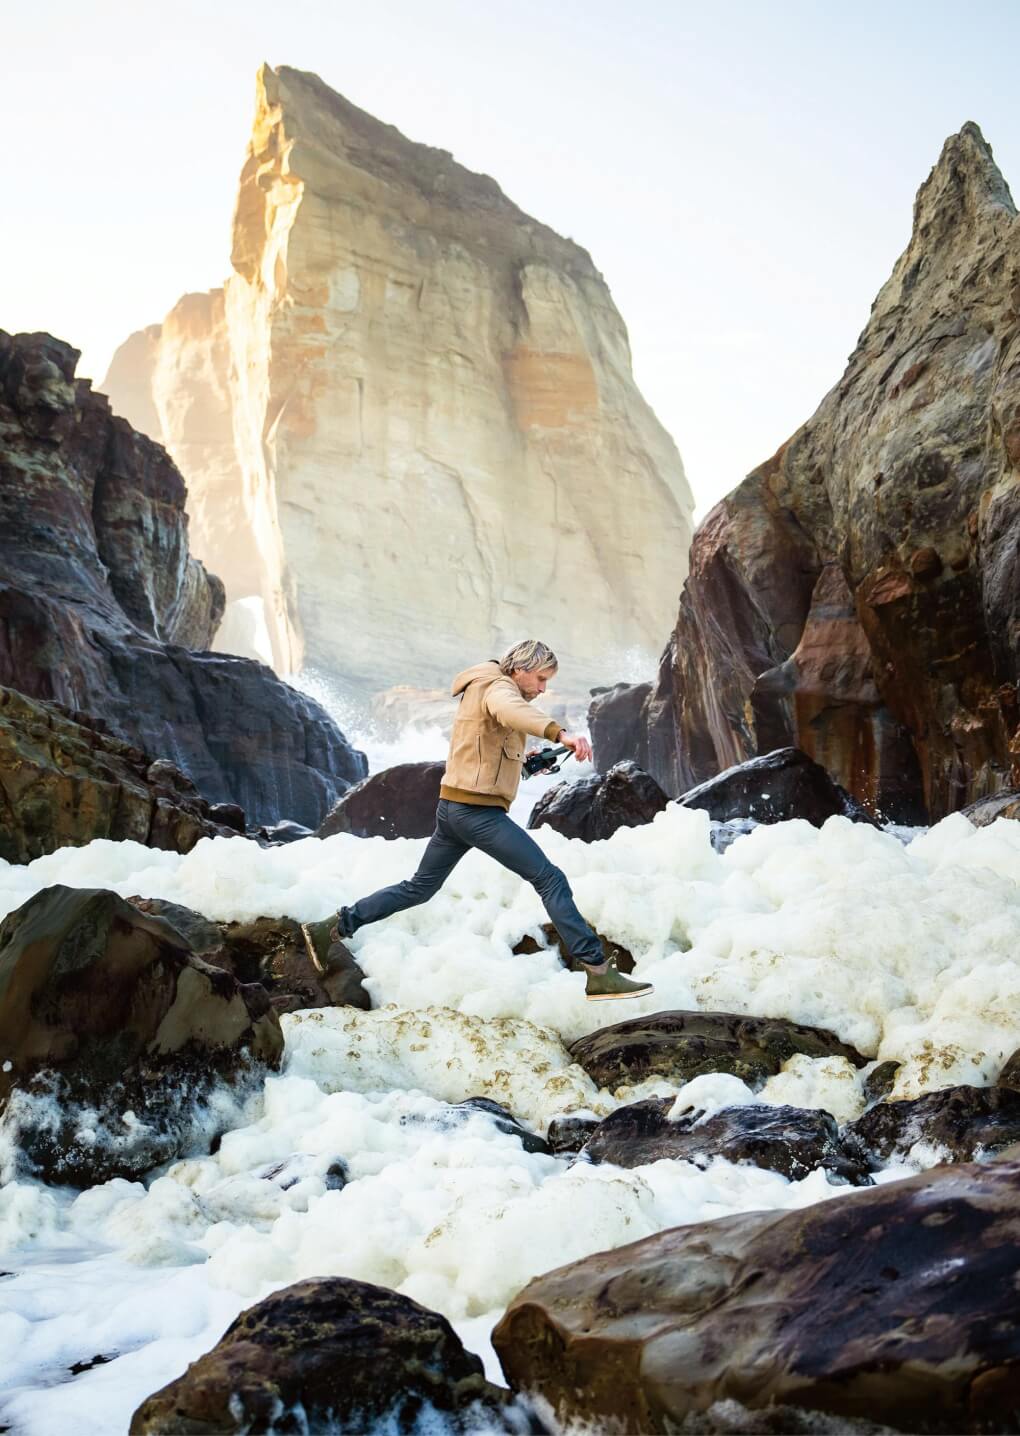 Ben Moon jumps between rocks and over foam on the shore